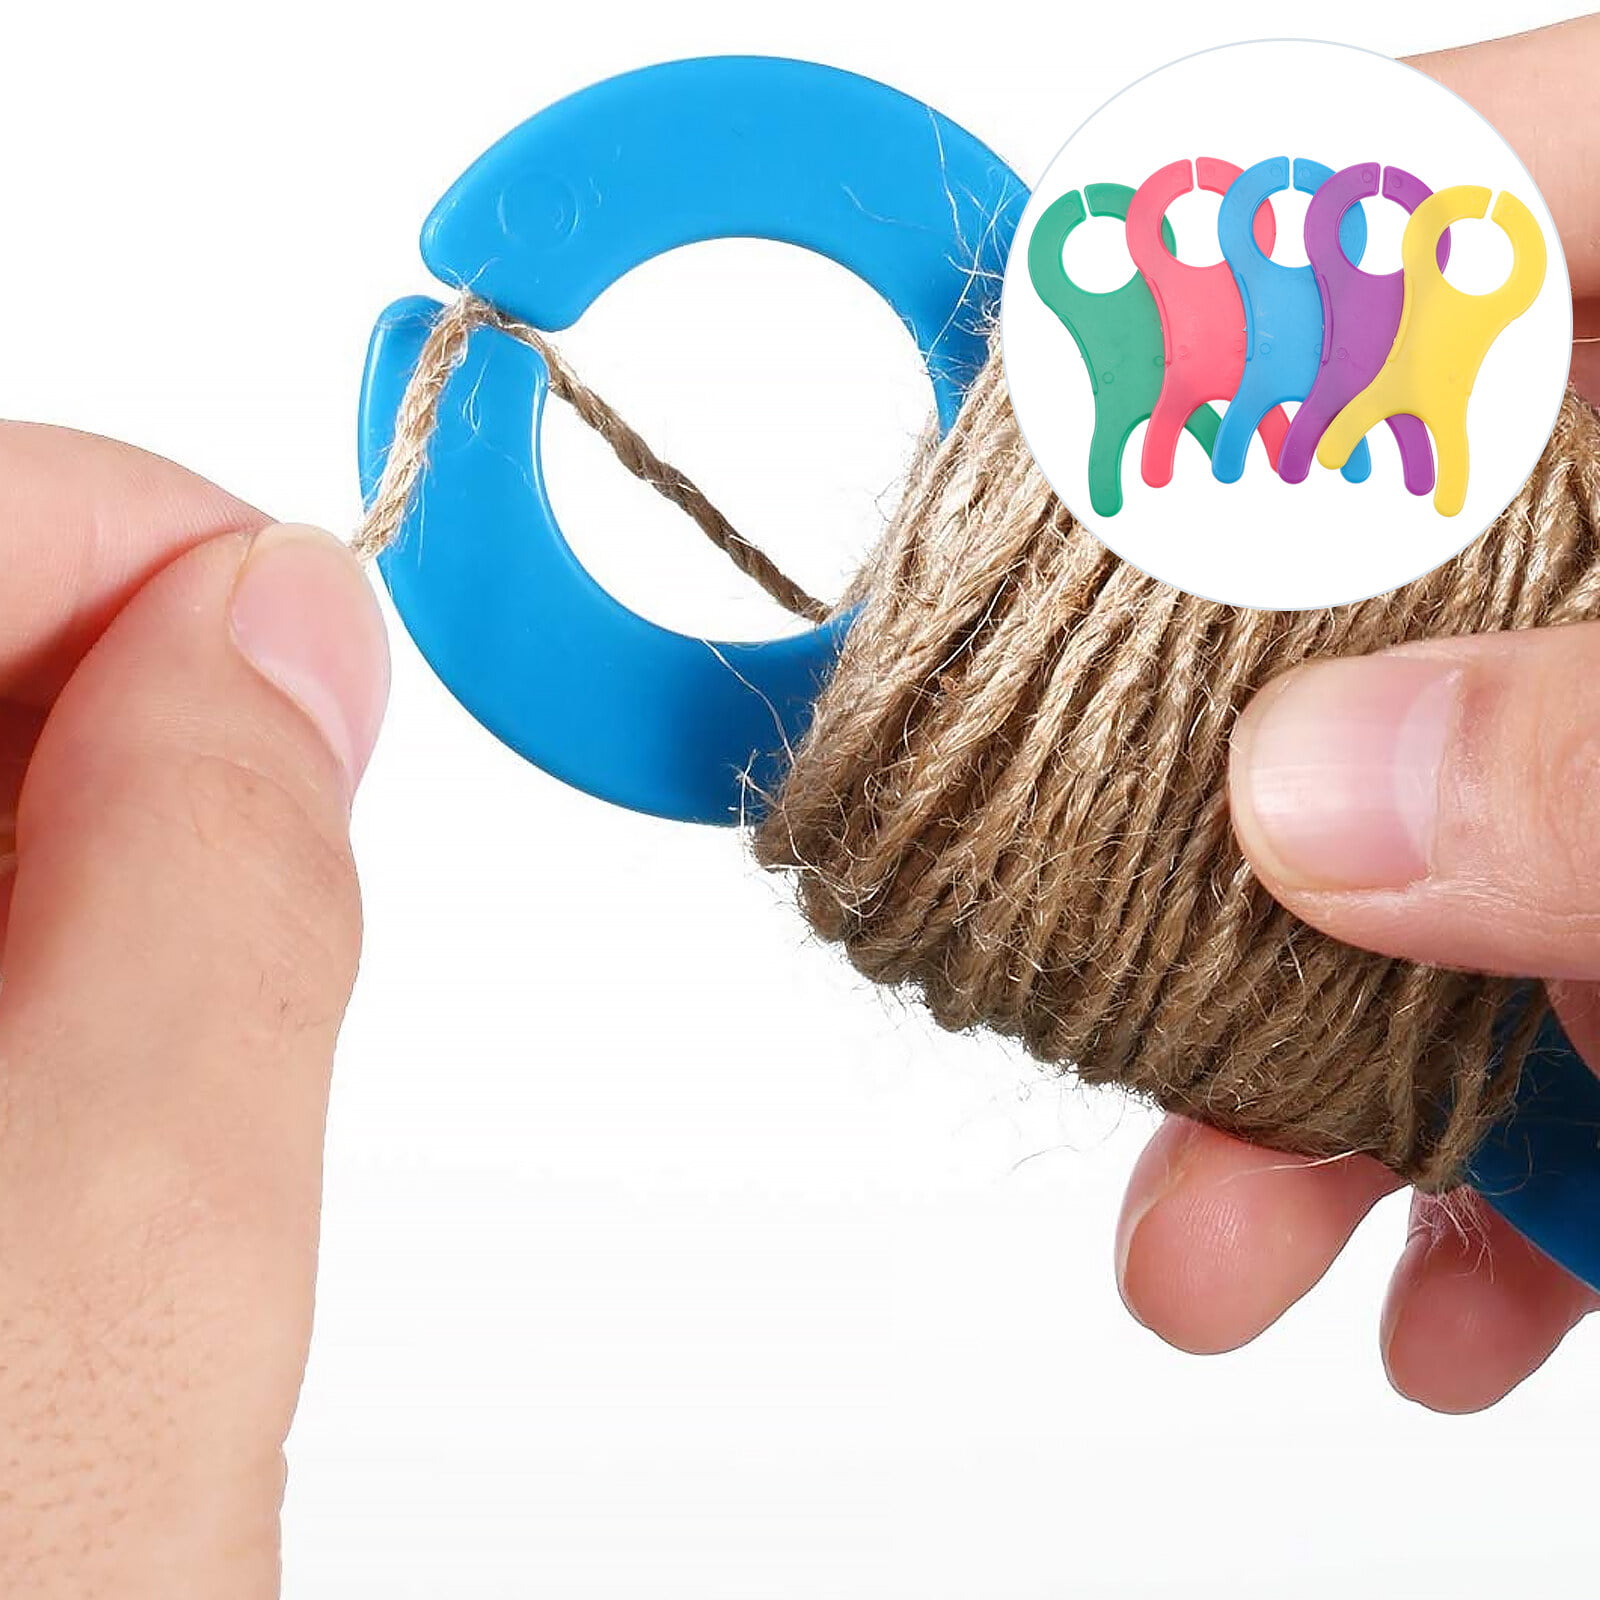 20/10PCS Yarn Bobbins Spool Thread Knitting Sewing Crochet Weave